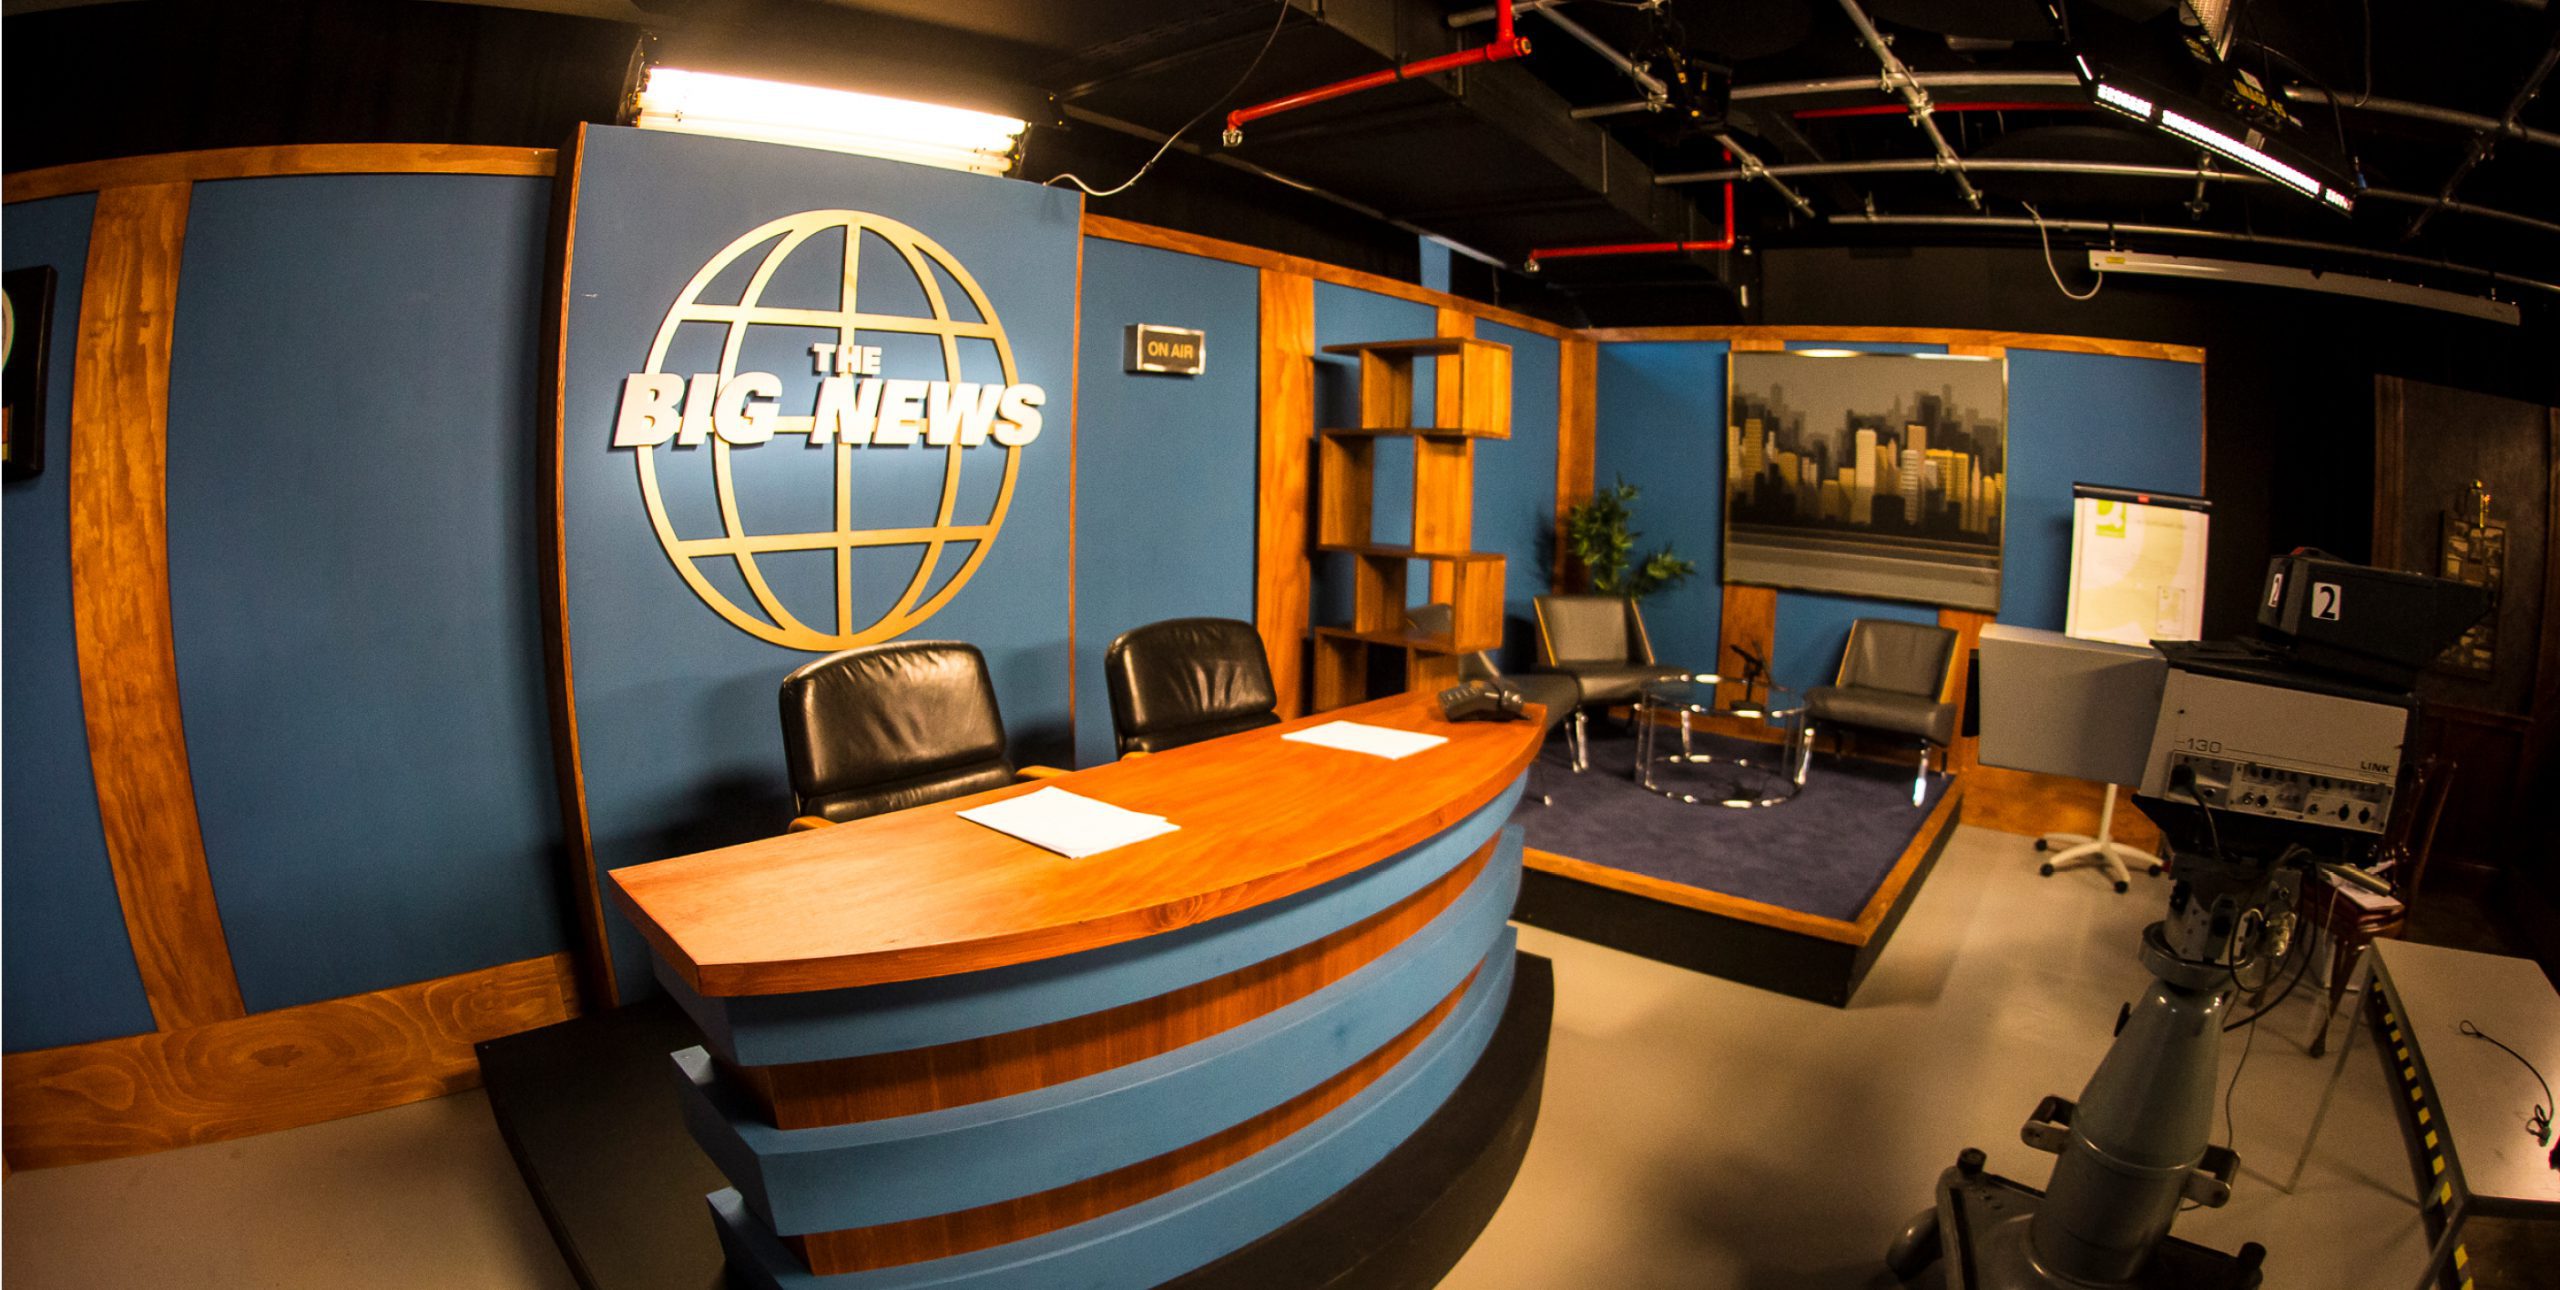 A news studio set